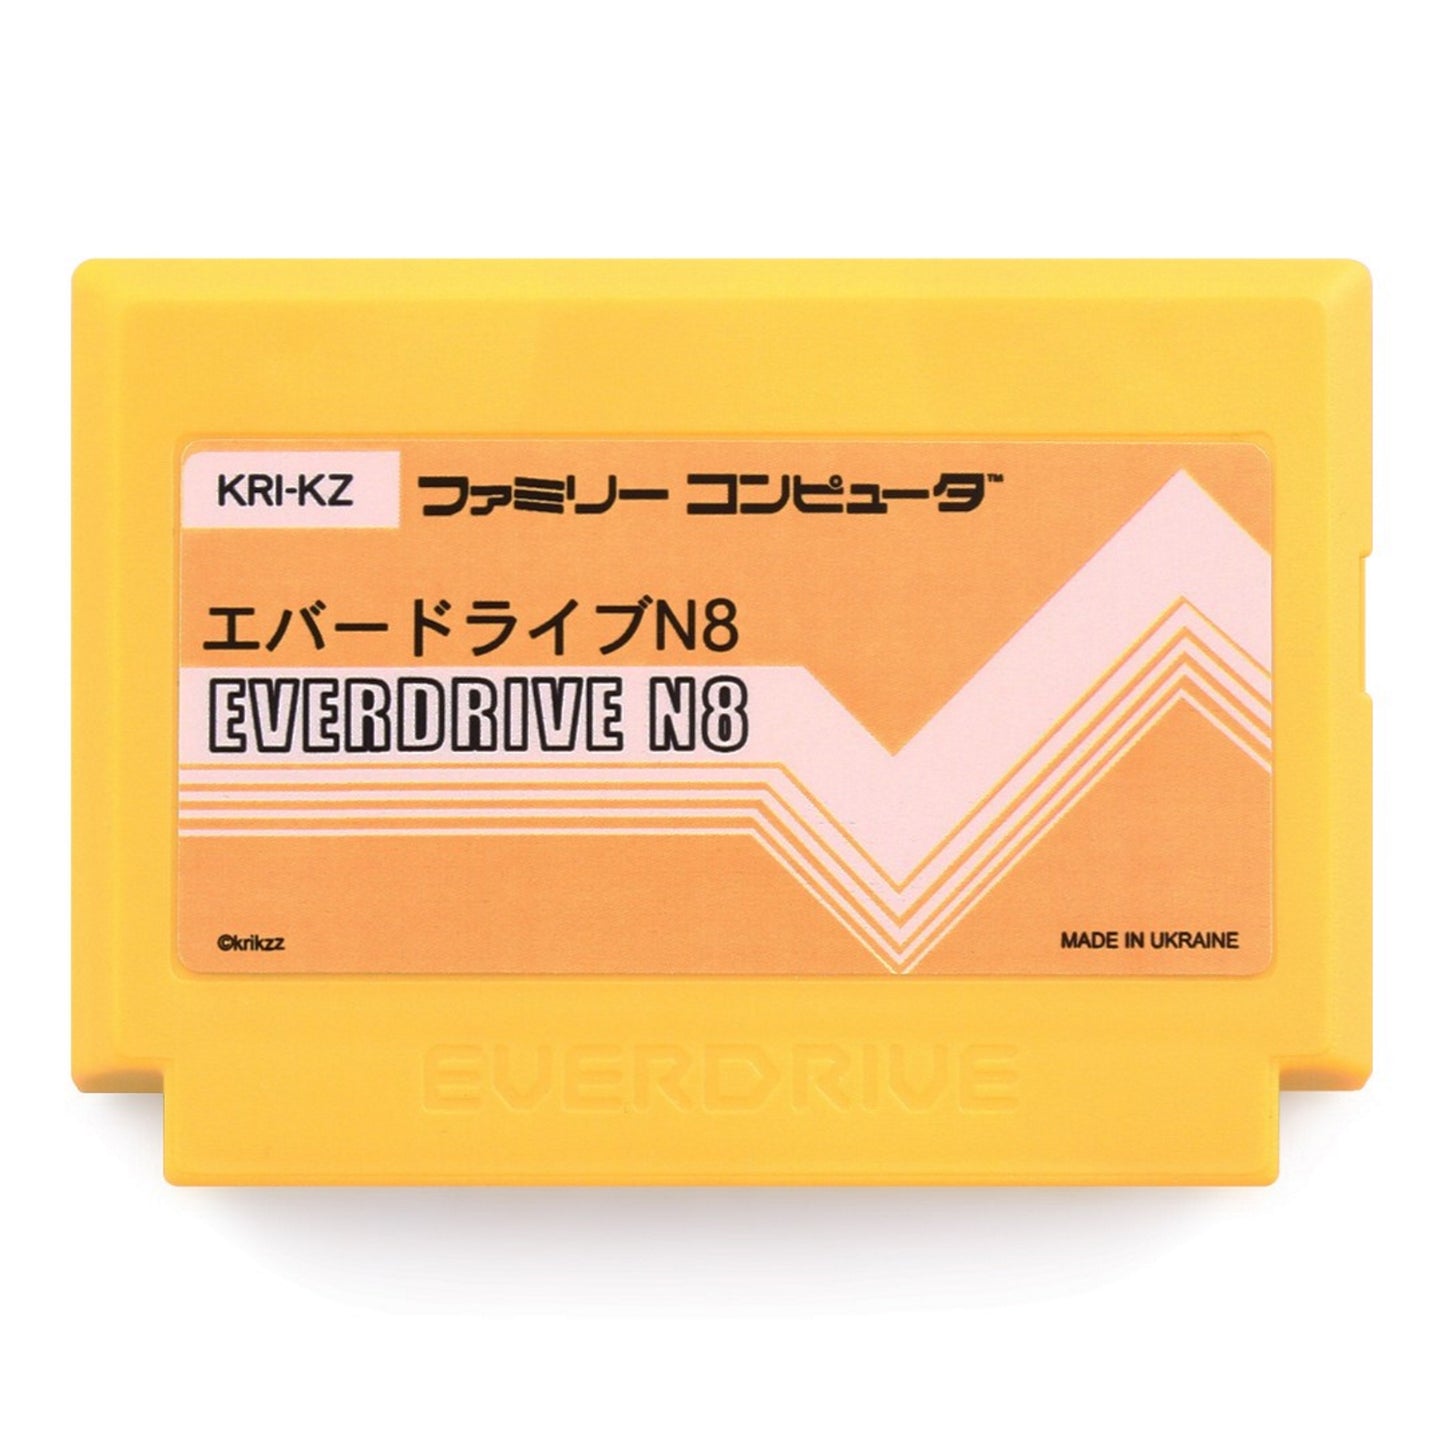 Everdrive N8 Famicom - Yellow